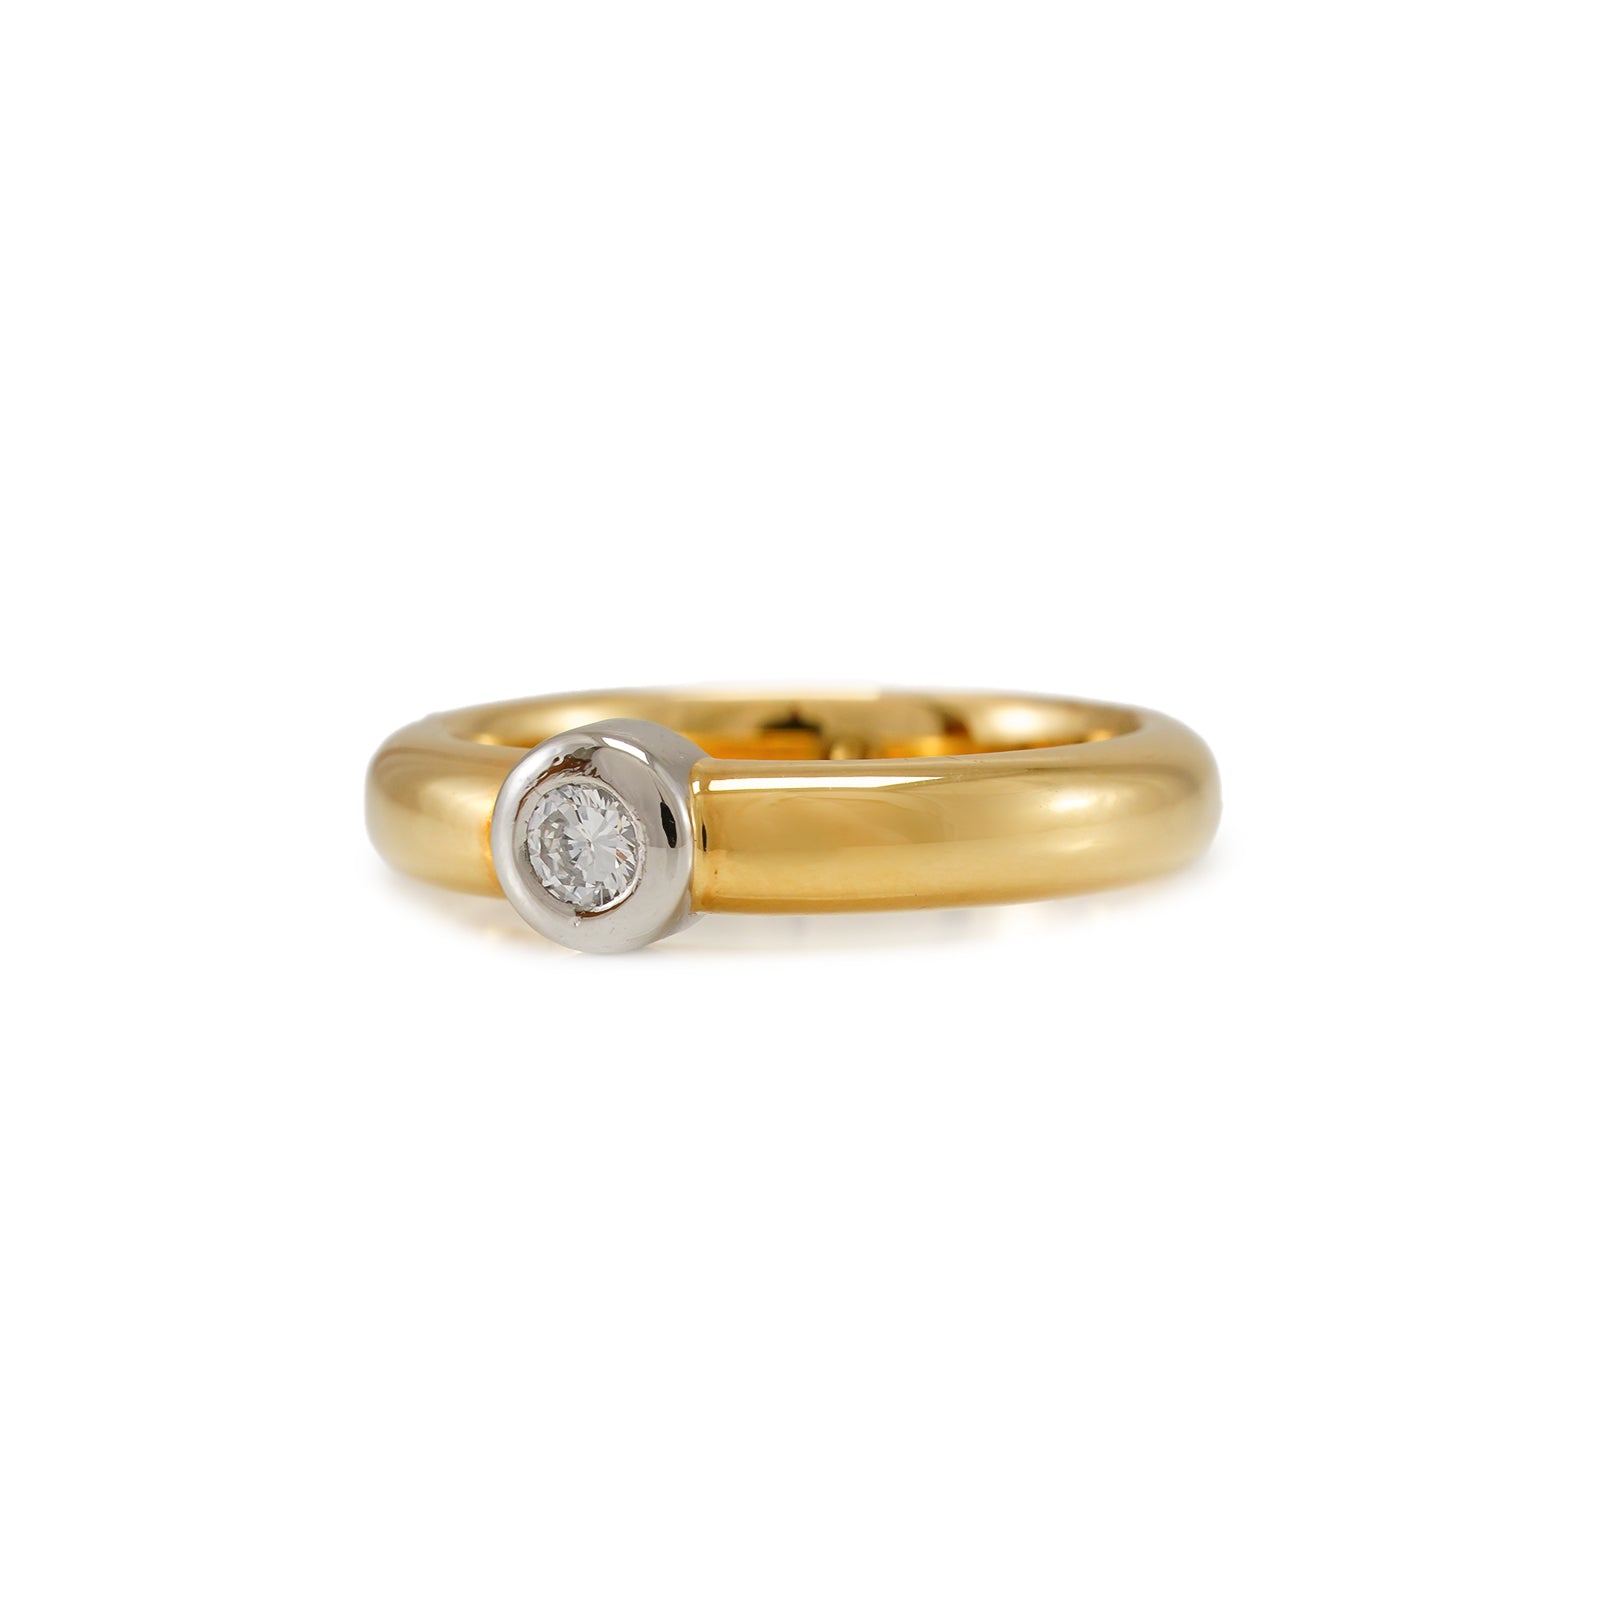 Verlobungsring Diamant Gelgold 18K Platin 950 Damenschmuck Damenring Goldring